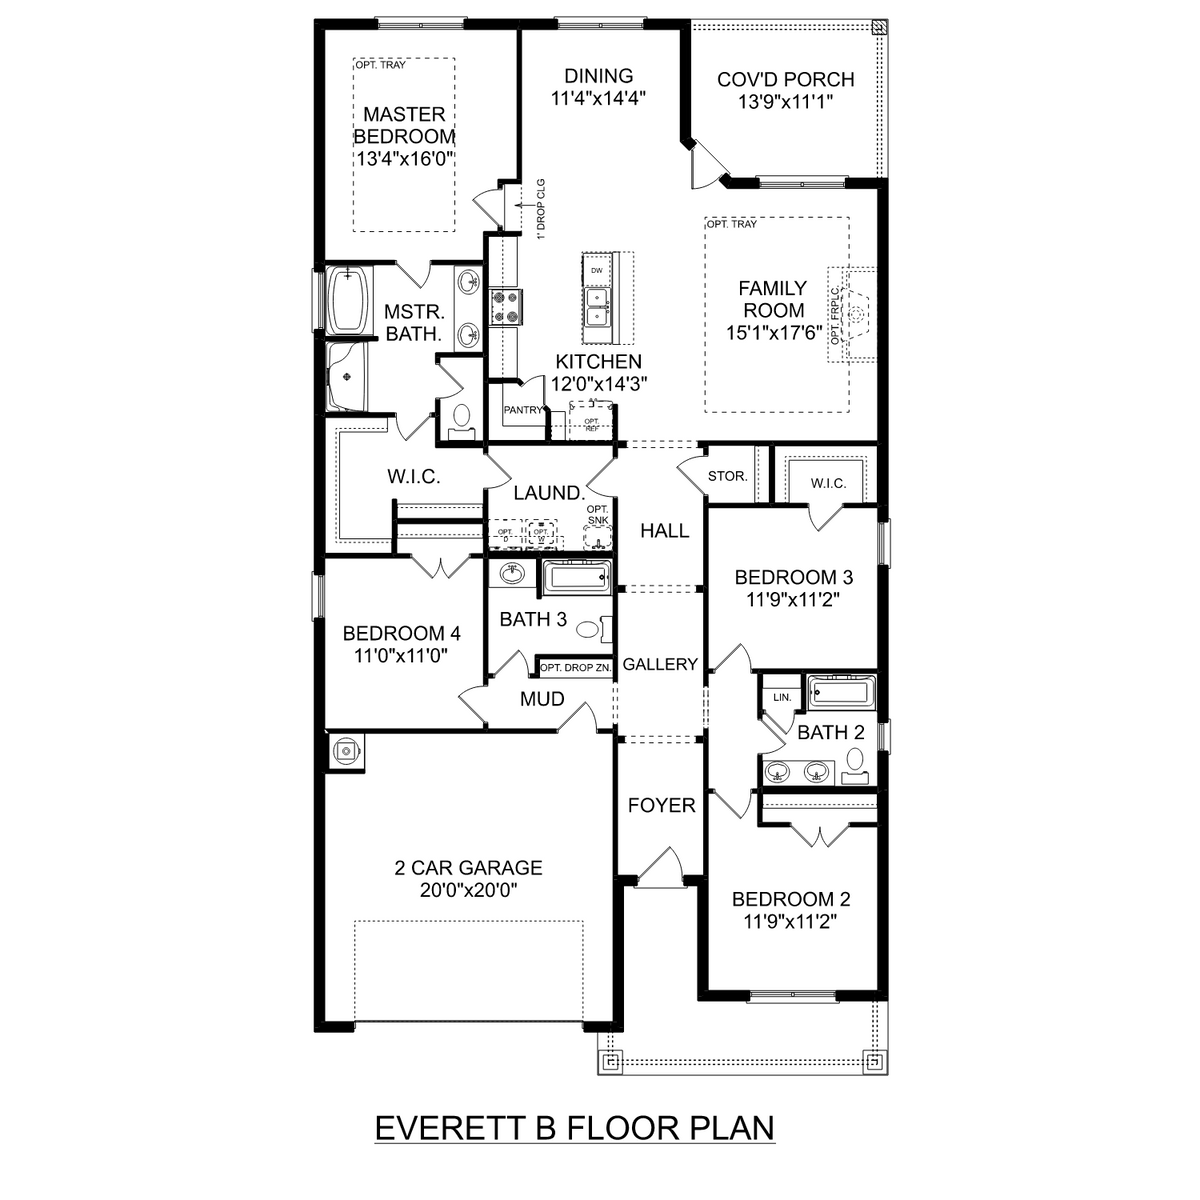 1 - The Everett B floor plan layout for 16625 Demi Drive in Davidson Homes' Ricketts Farm community.